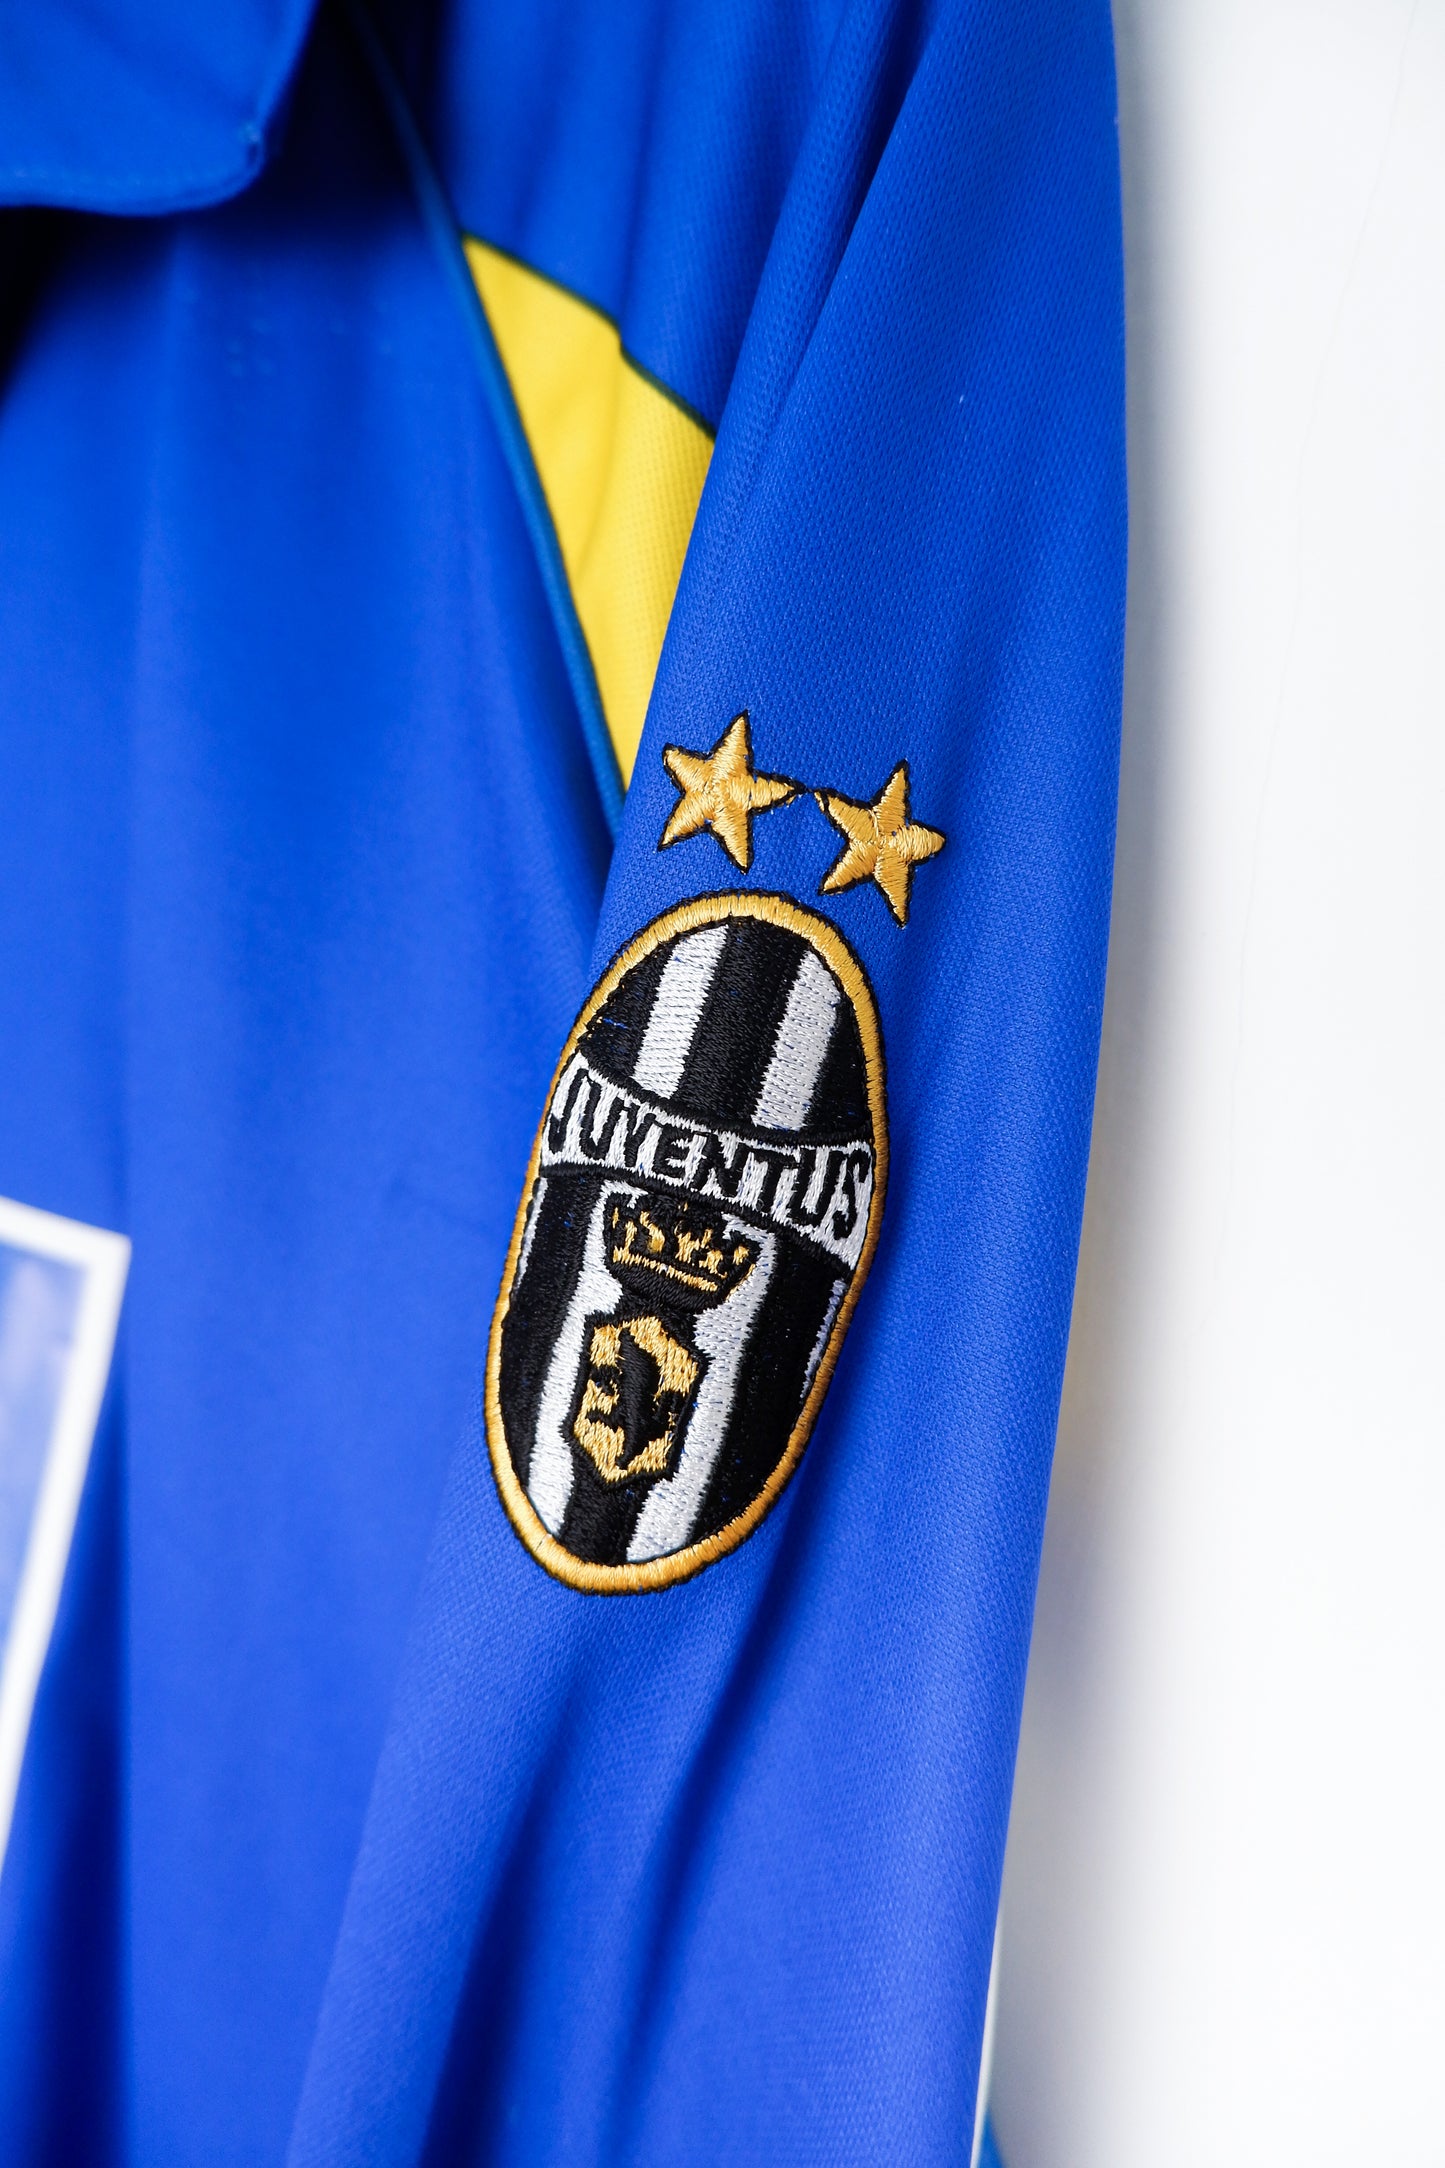 Authentic Juventus 1998/99 Third - Alessandro Del Piero #10 Size XL (Long Sleve)